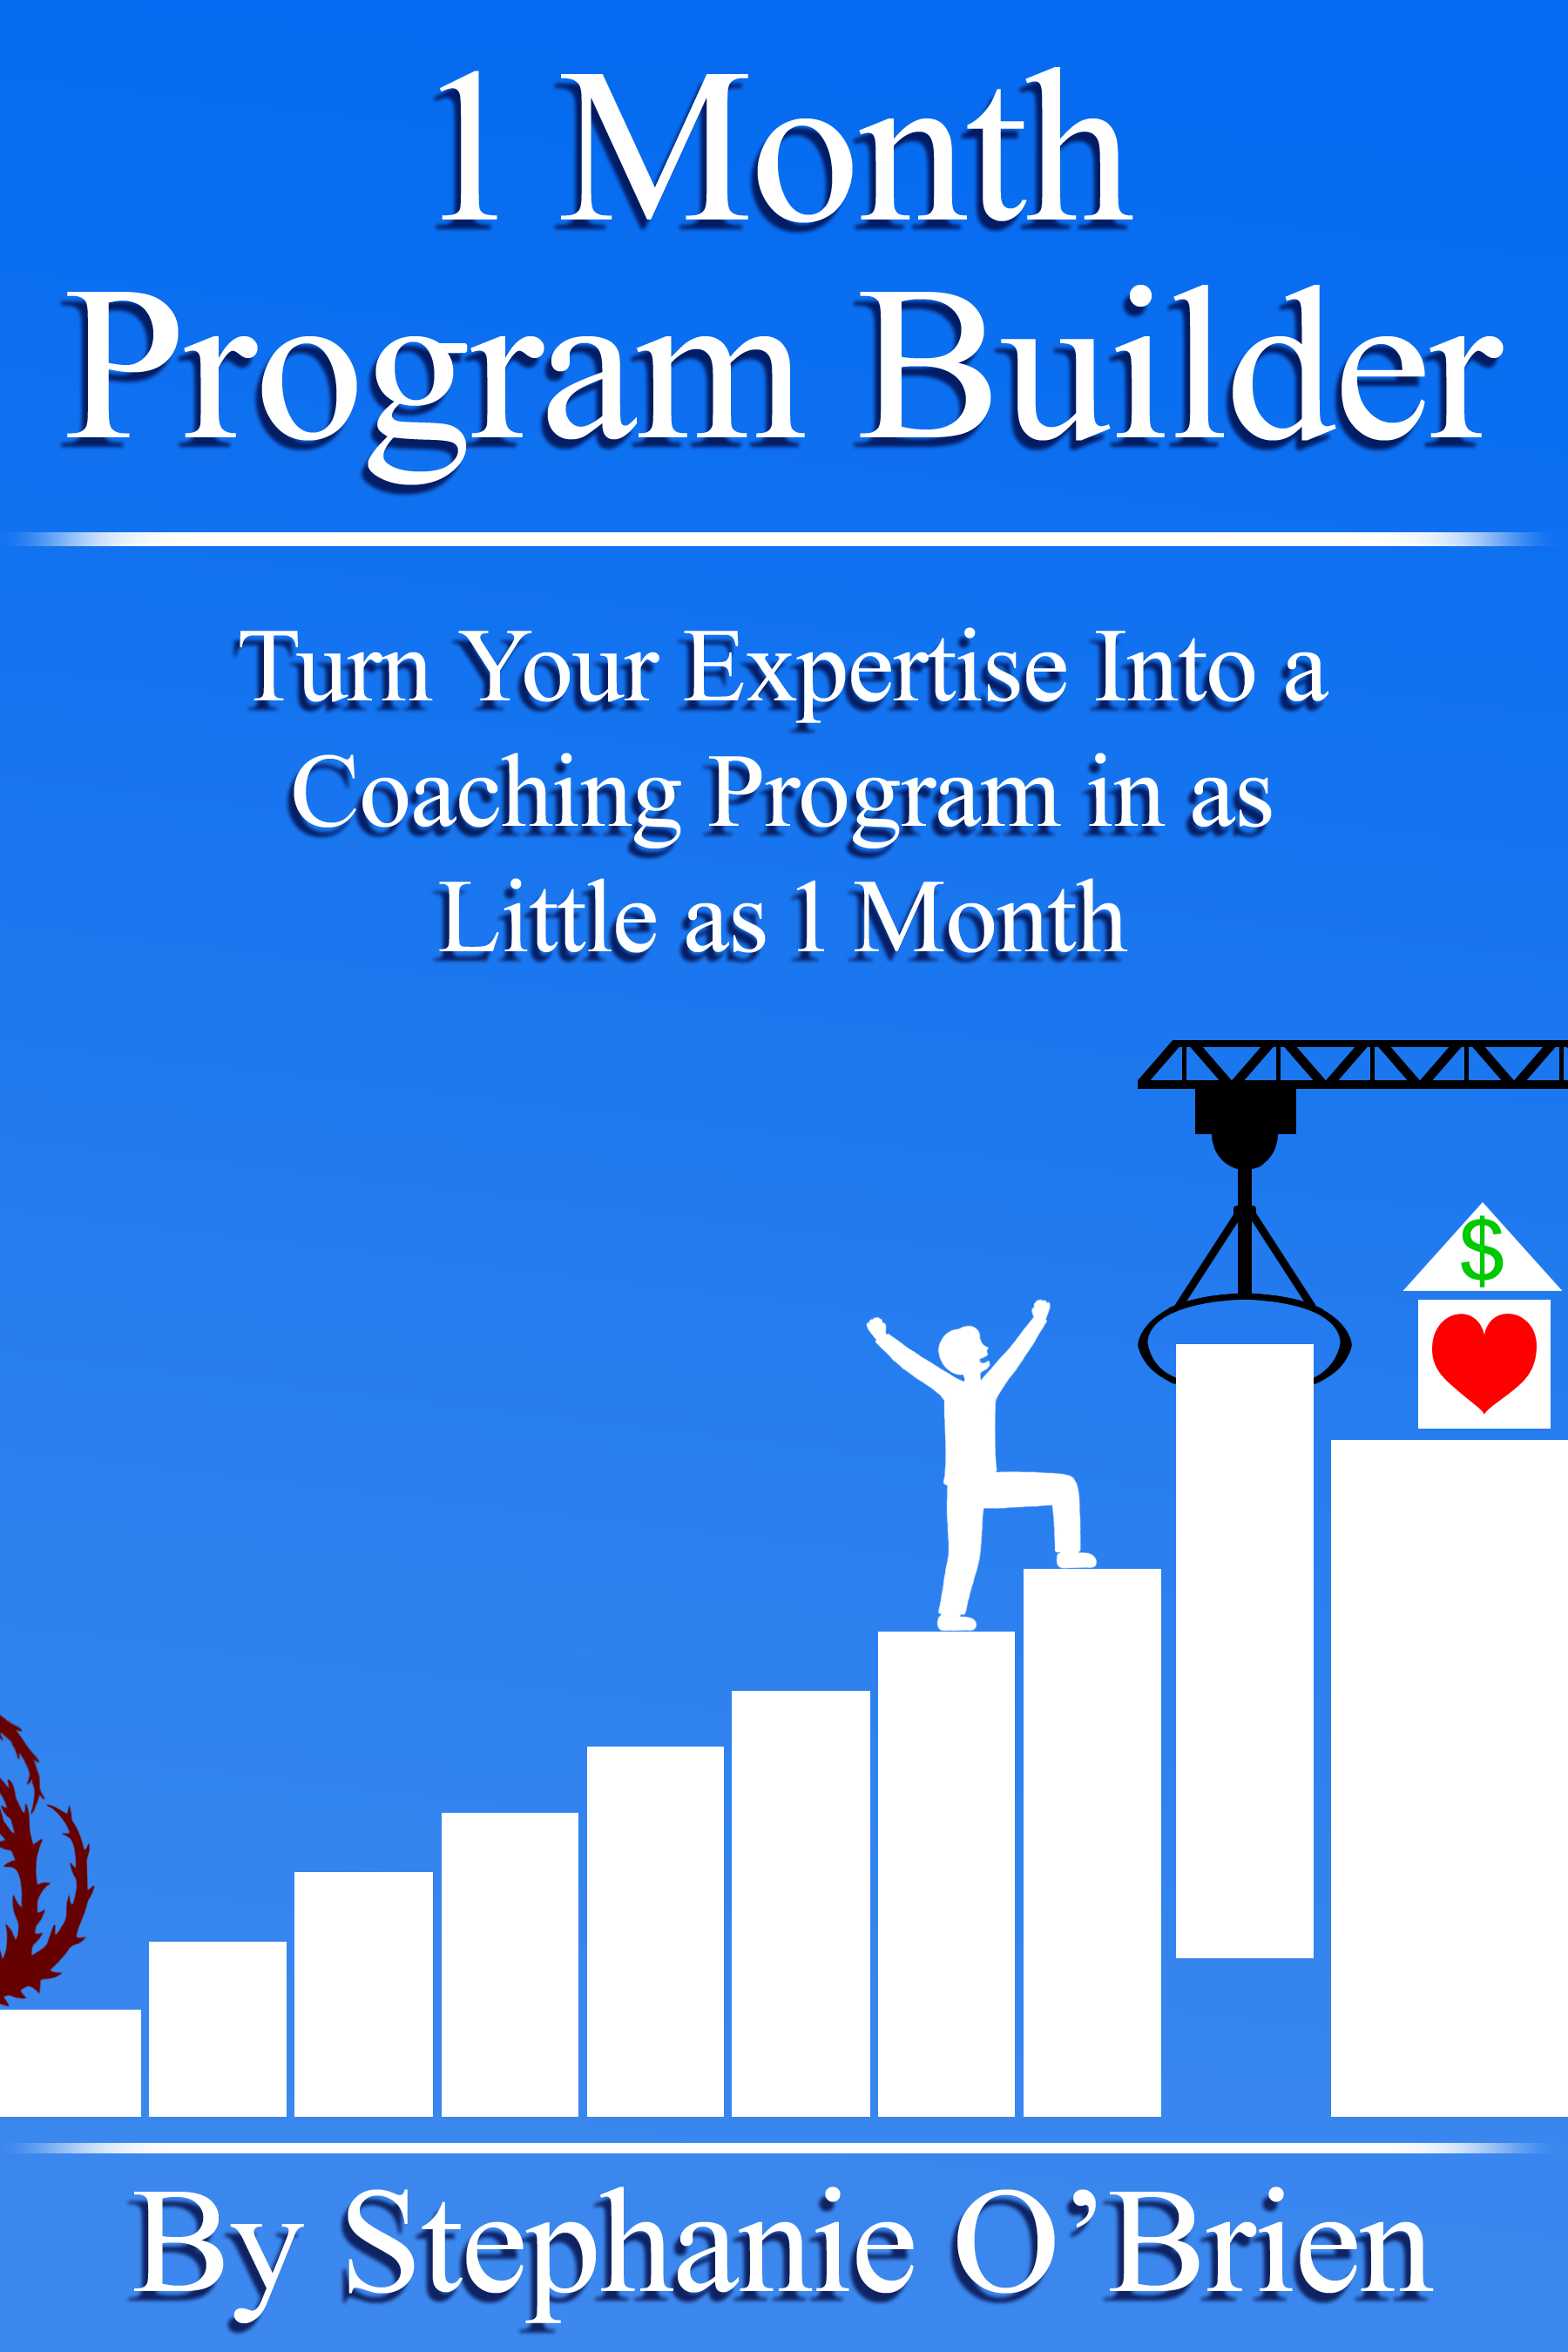 1 Month Program Builder book cover